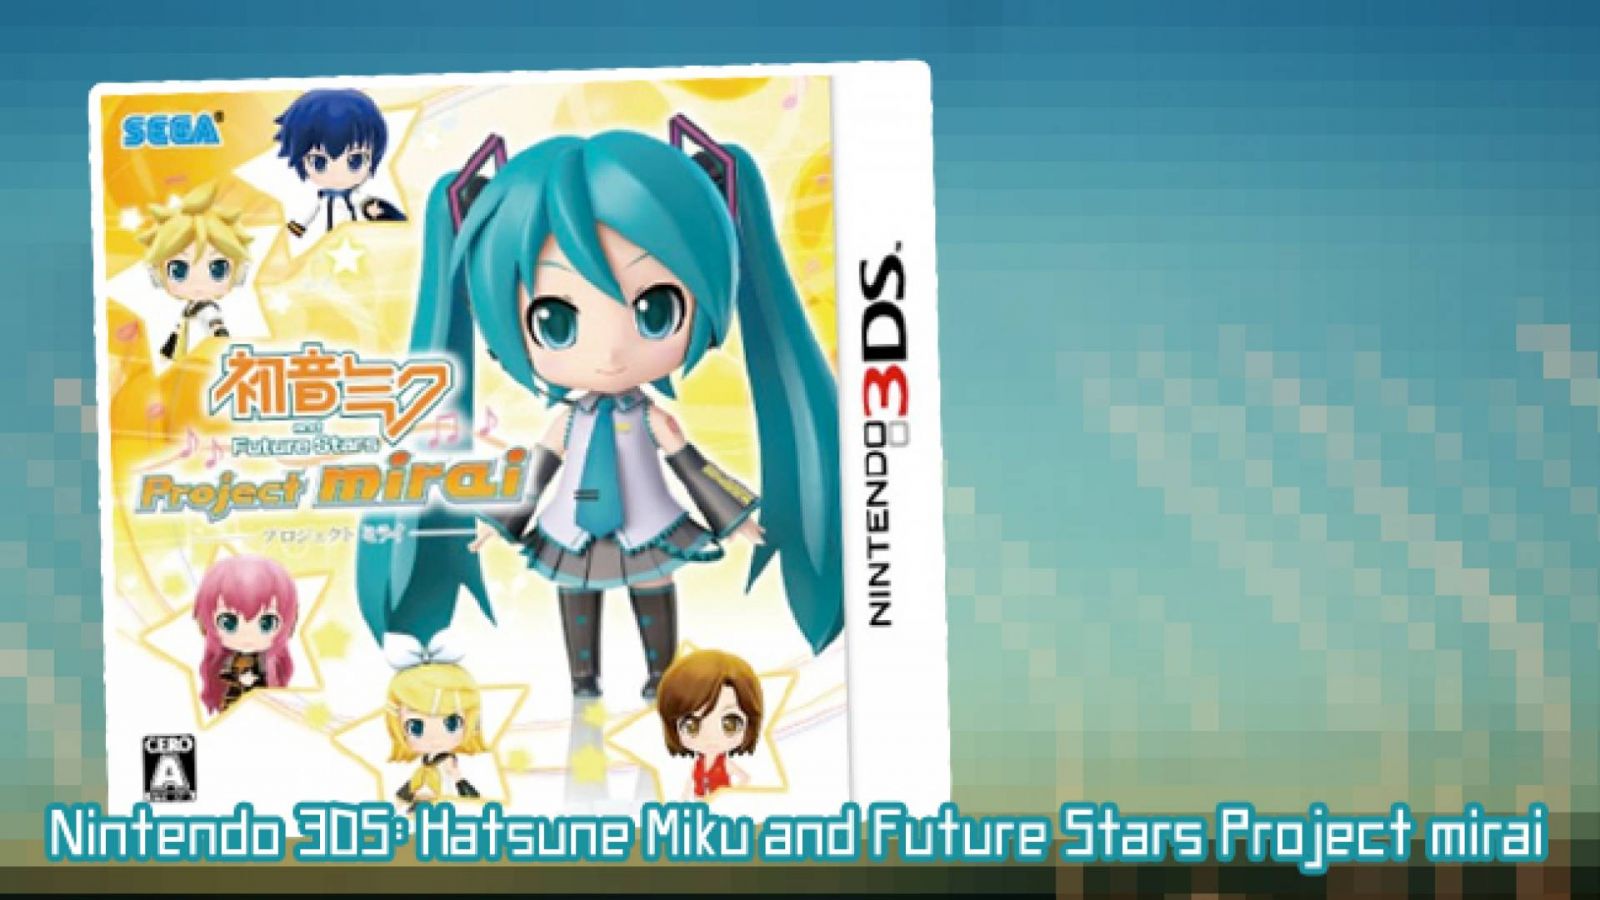 Nintendo 3DS: Hatsune Miku and Future Stars Project mirai © All Rights Reserved